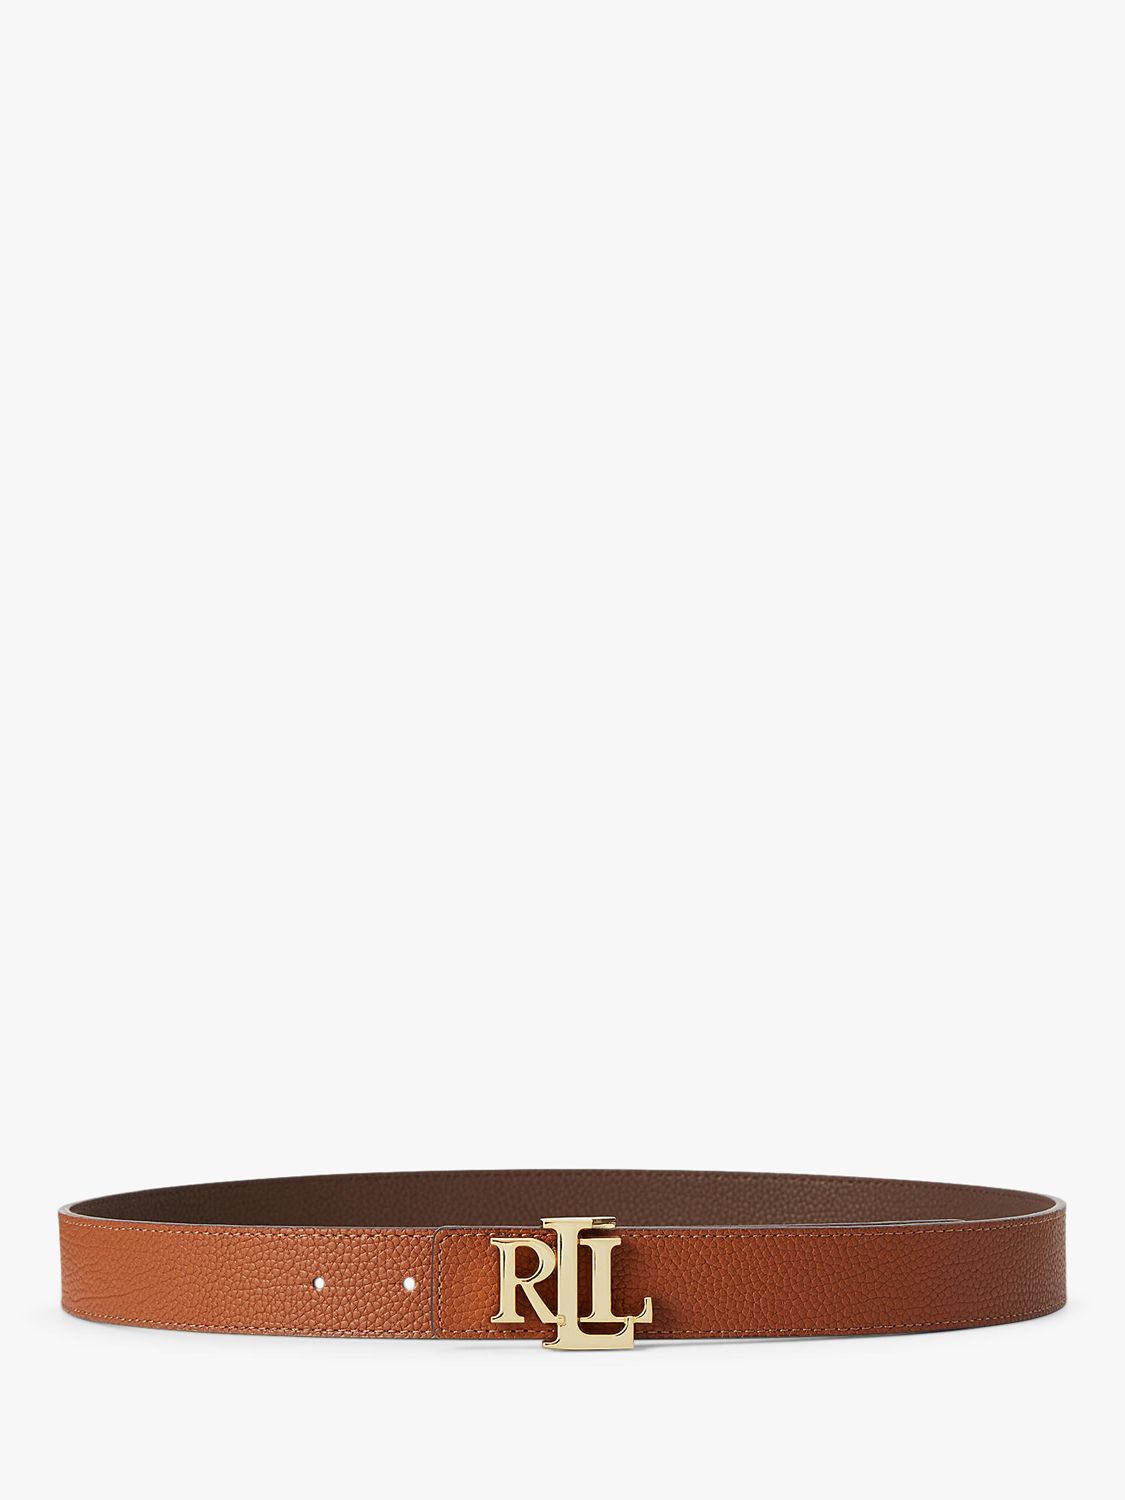 Ralph Lauren Casual Leather Reversible Dress Belt, Tan/Brown, XS